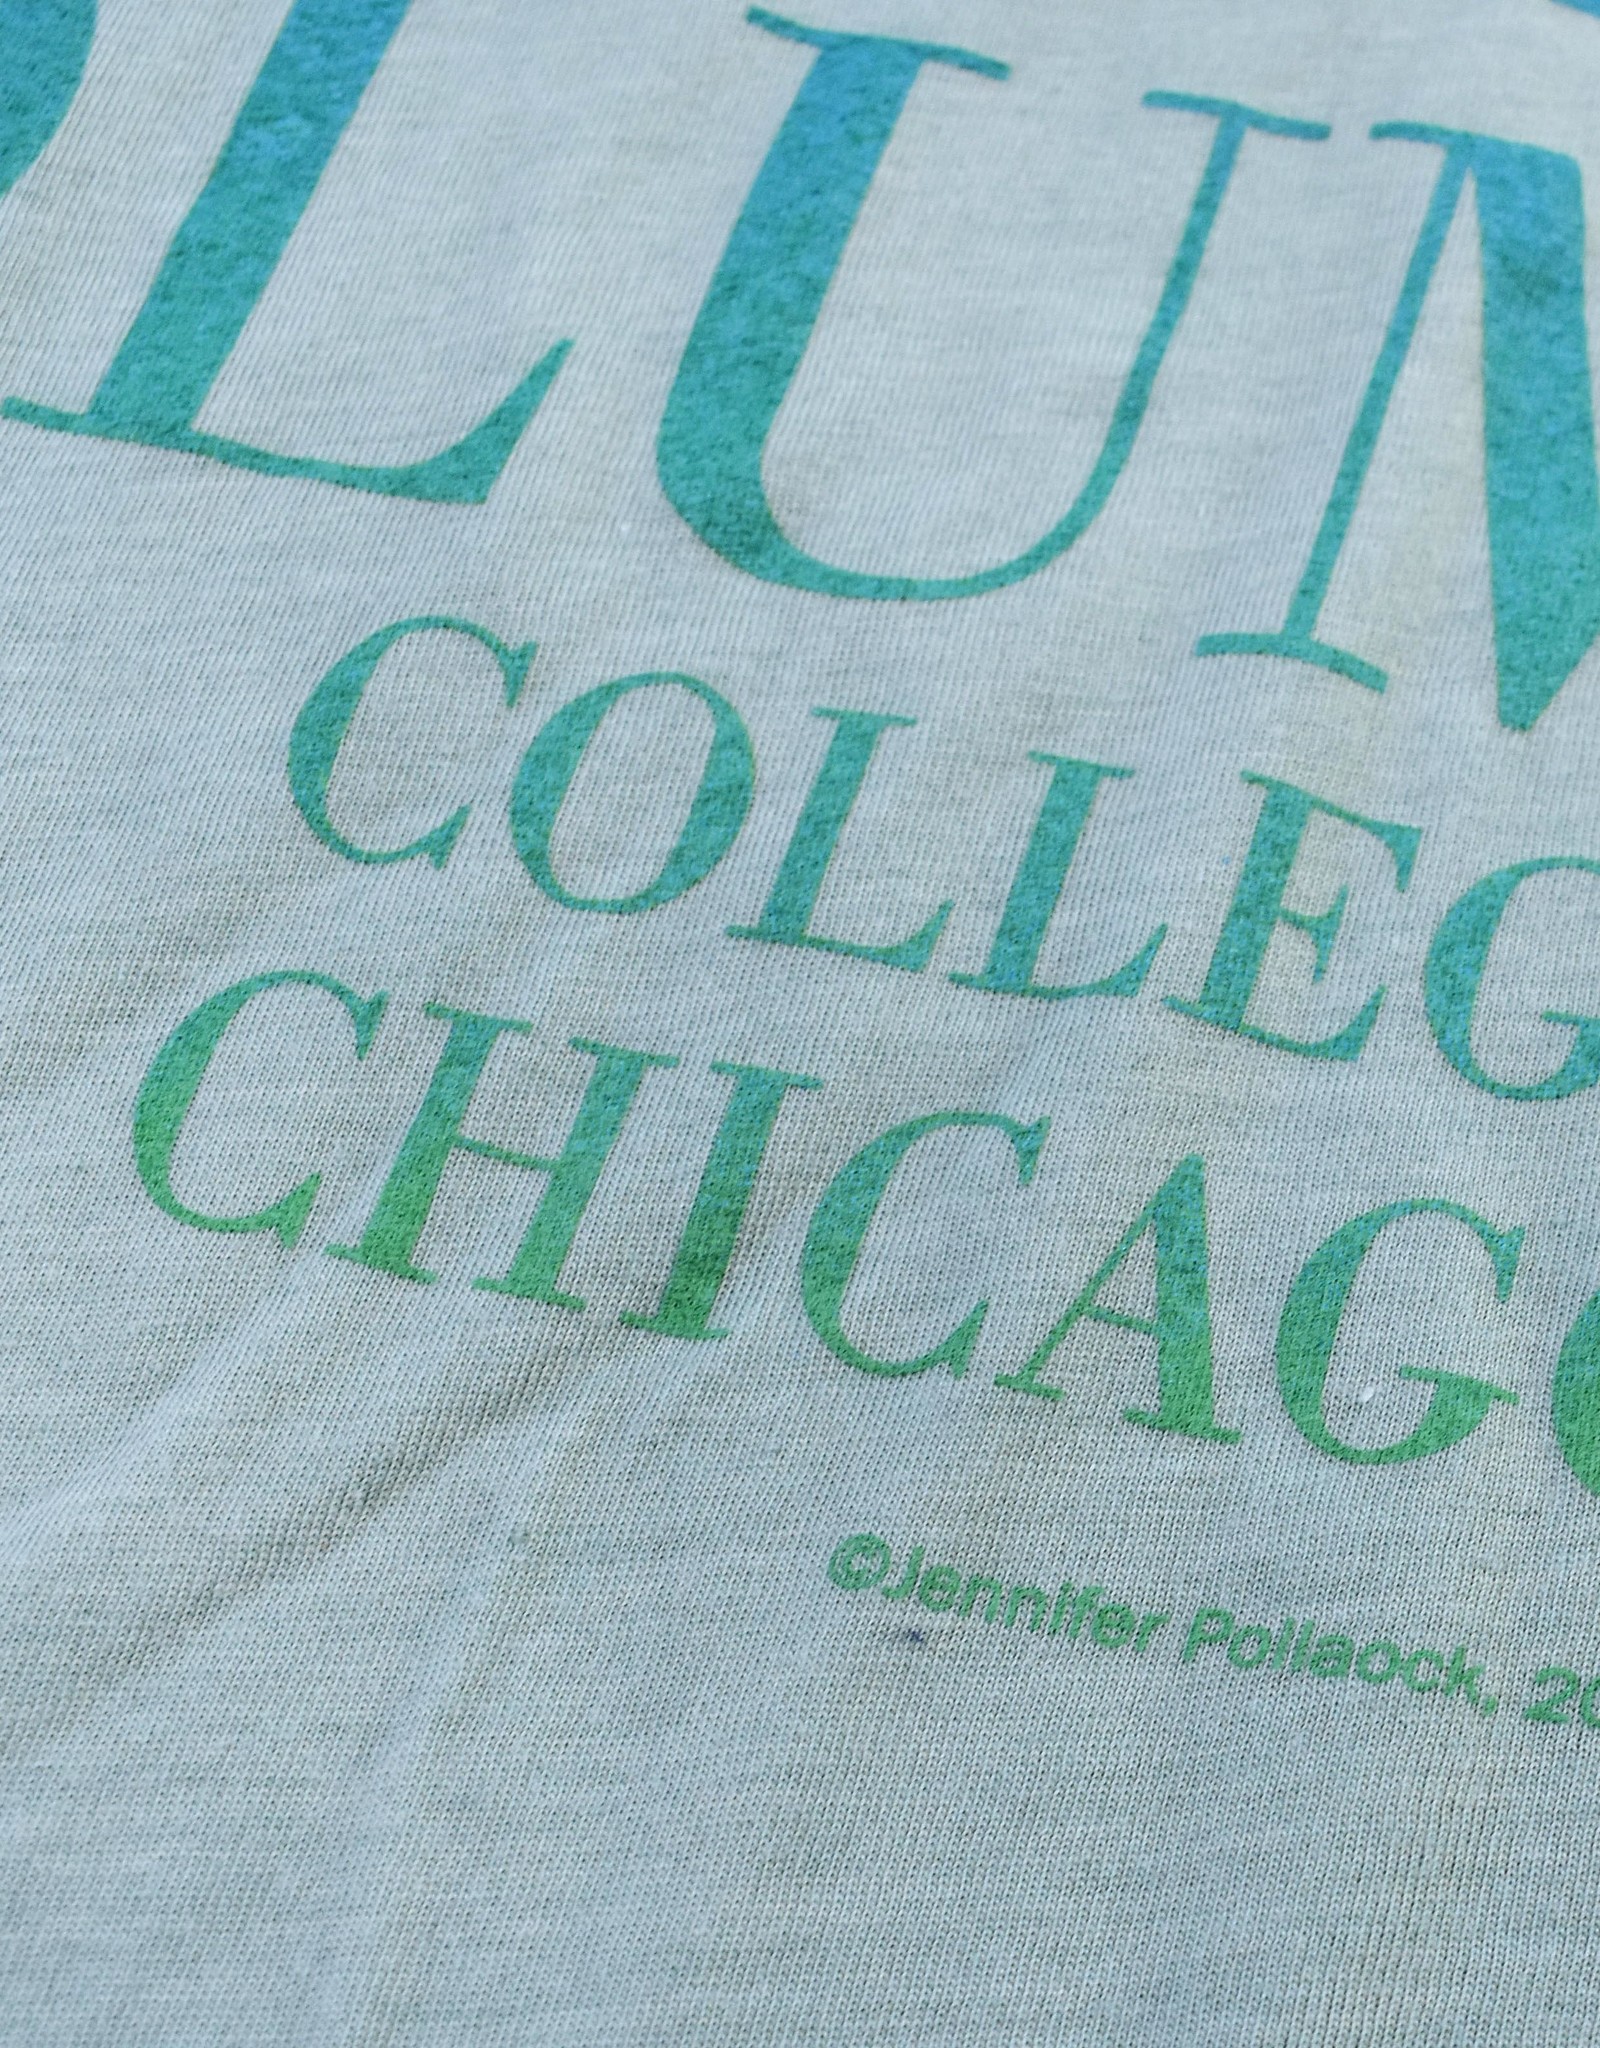 Buy Columbia, By Columbia Columbia T-Shirt